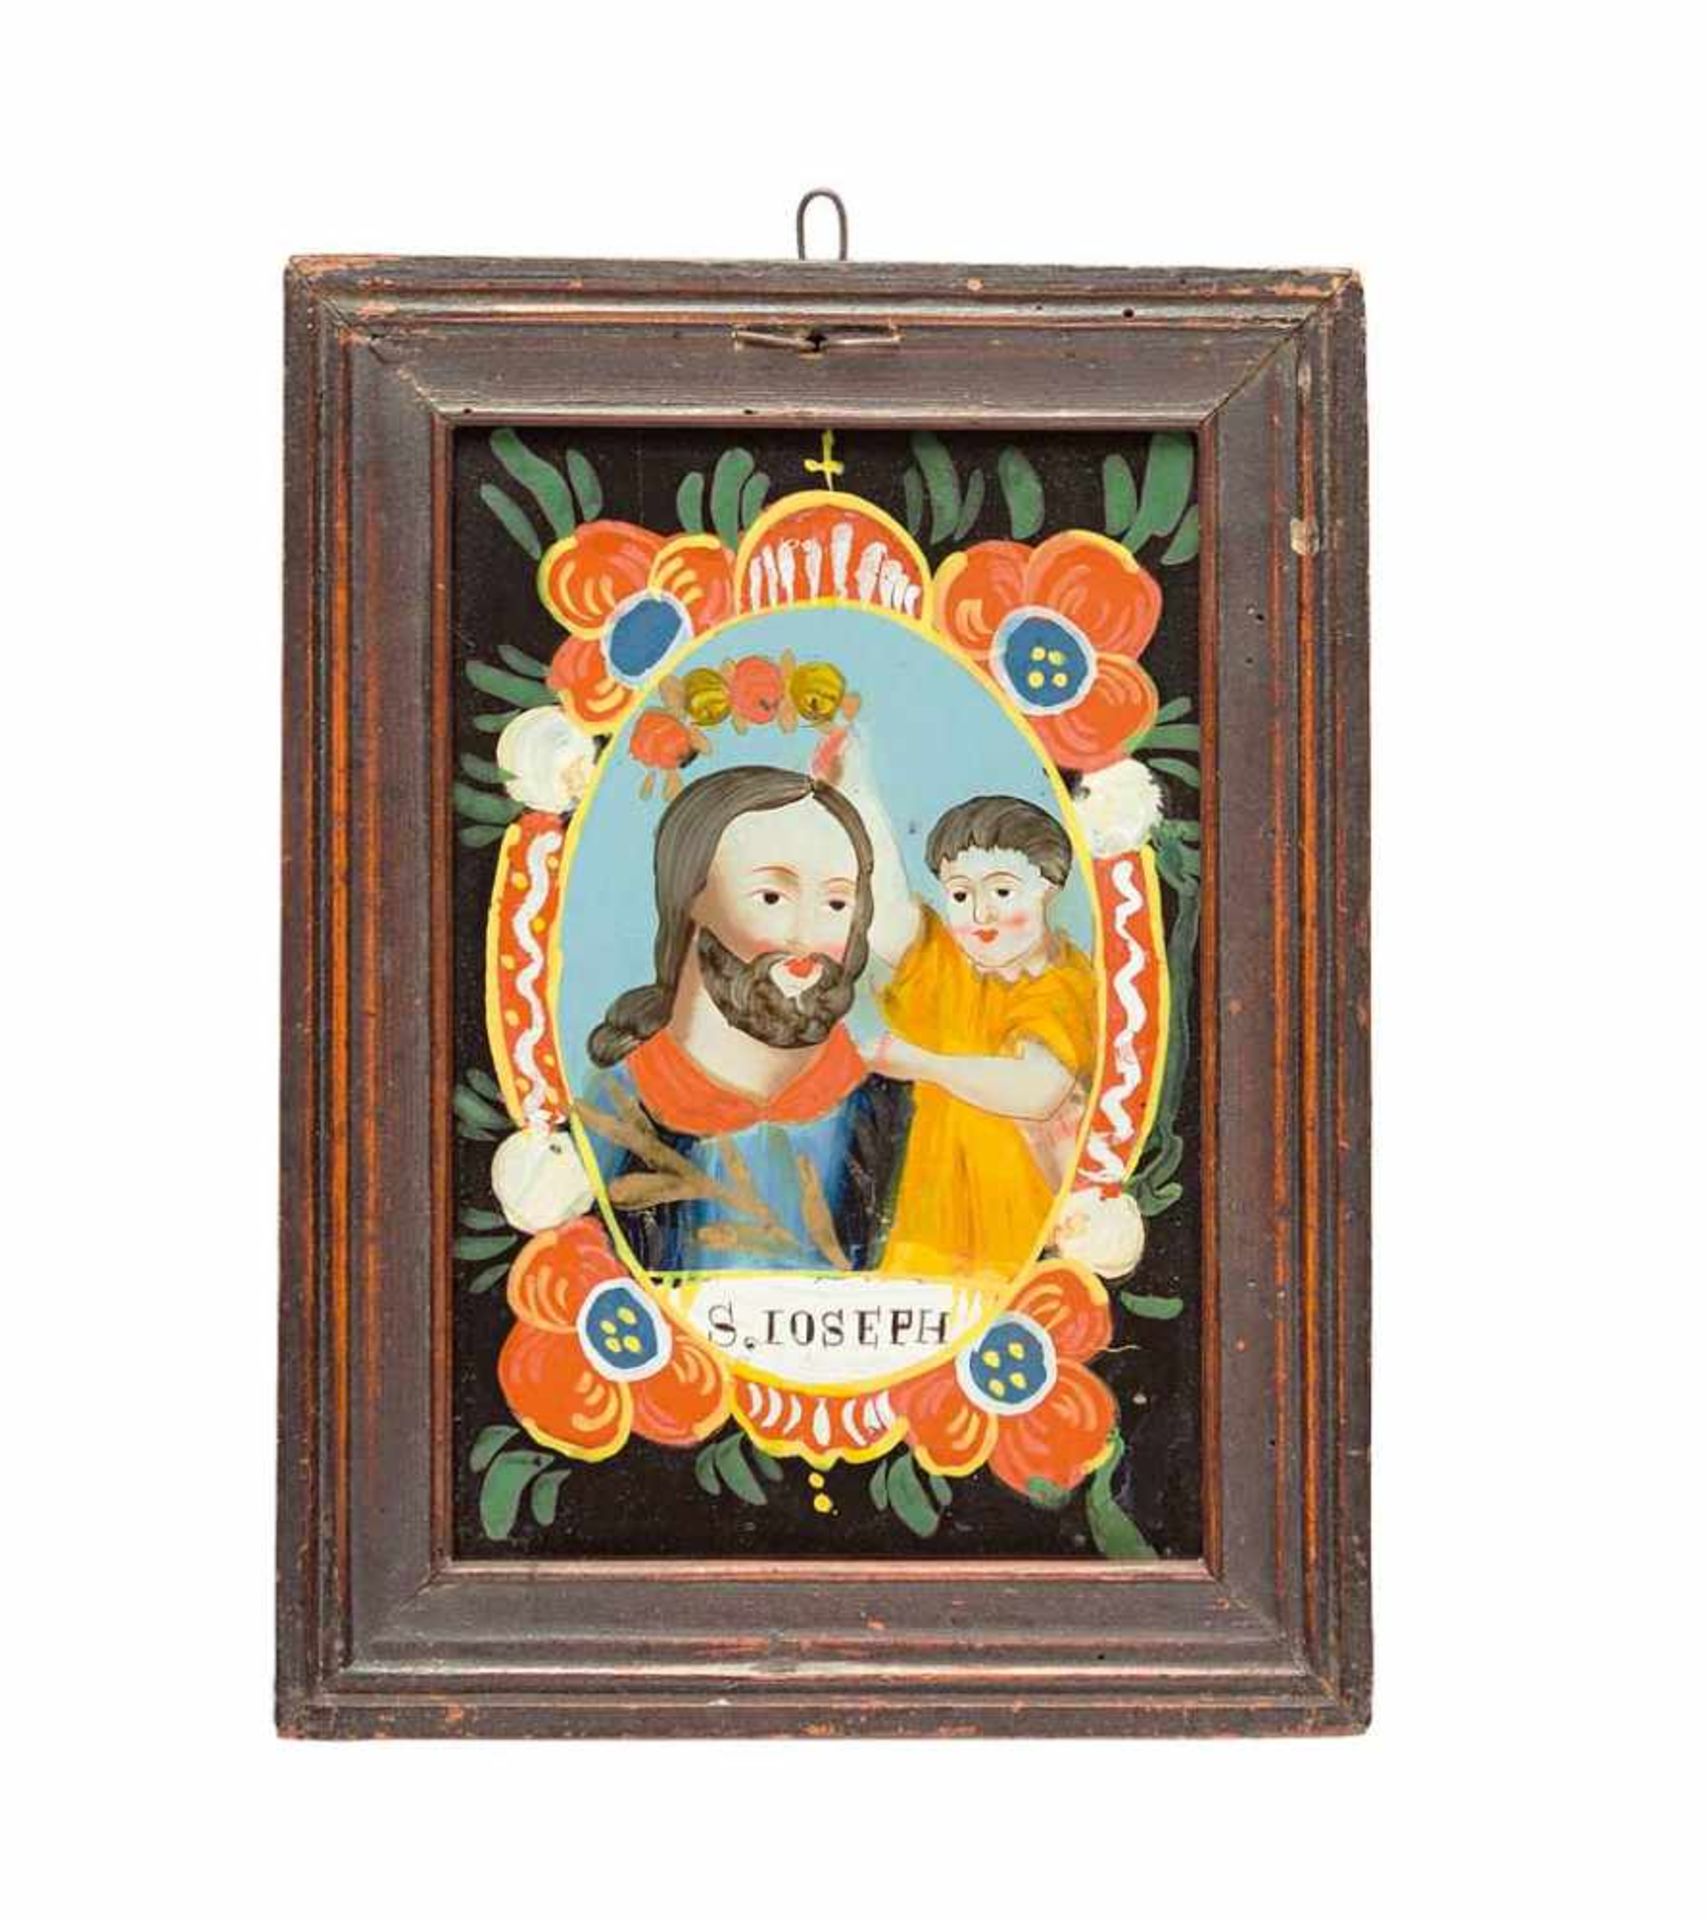 Josef mit dem Jesusknaben. Sandl, 19. Jh. 19 x 13 cm. R